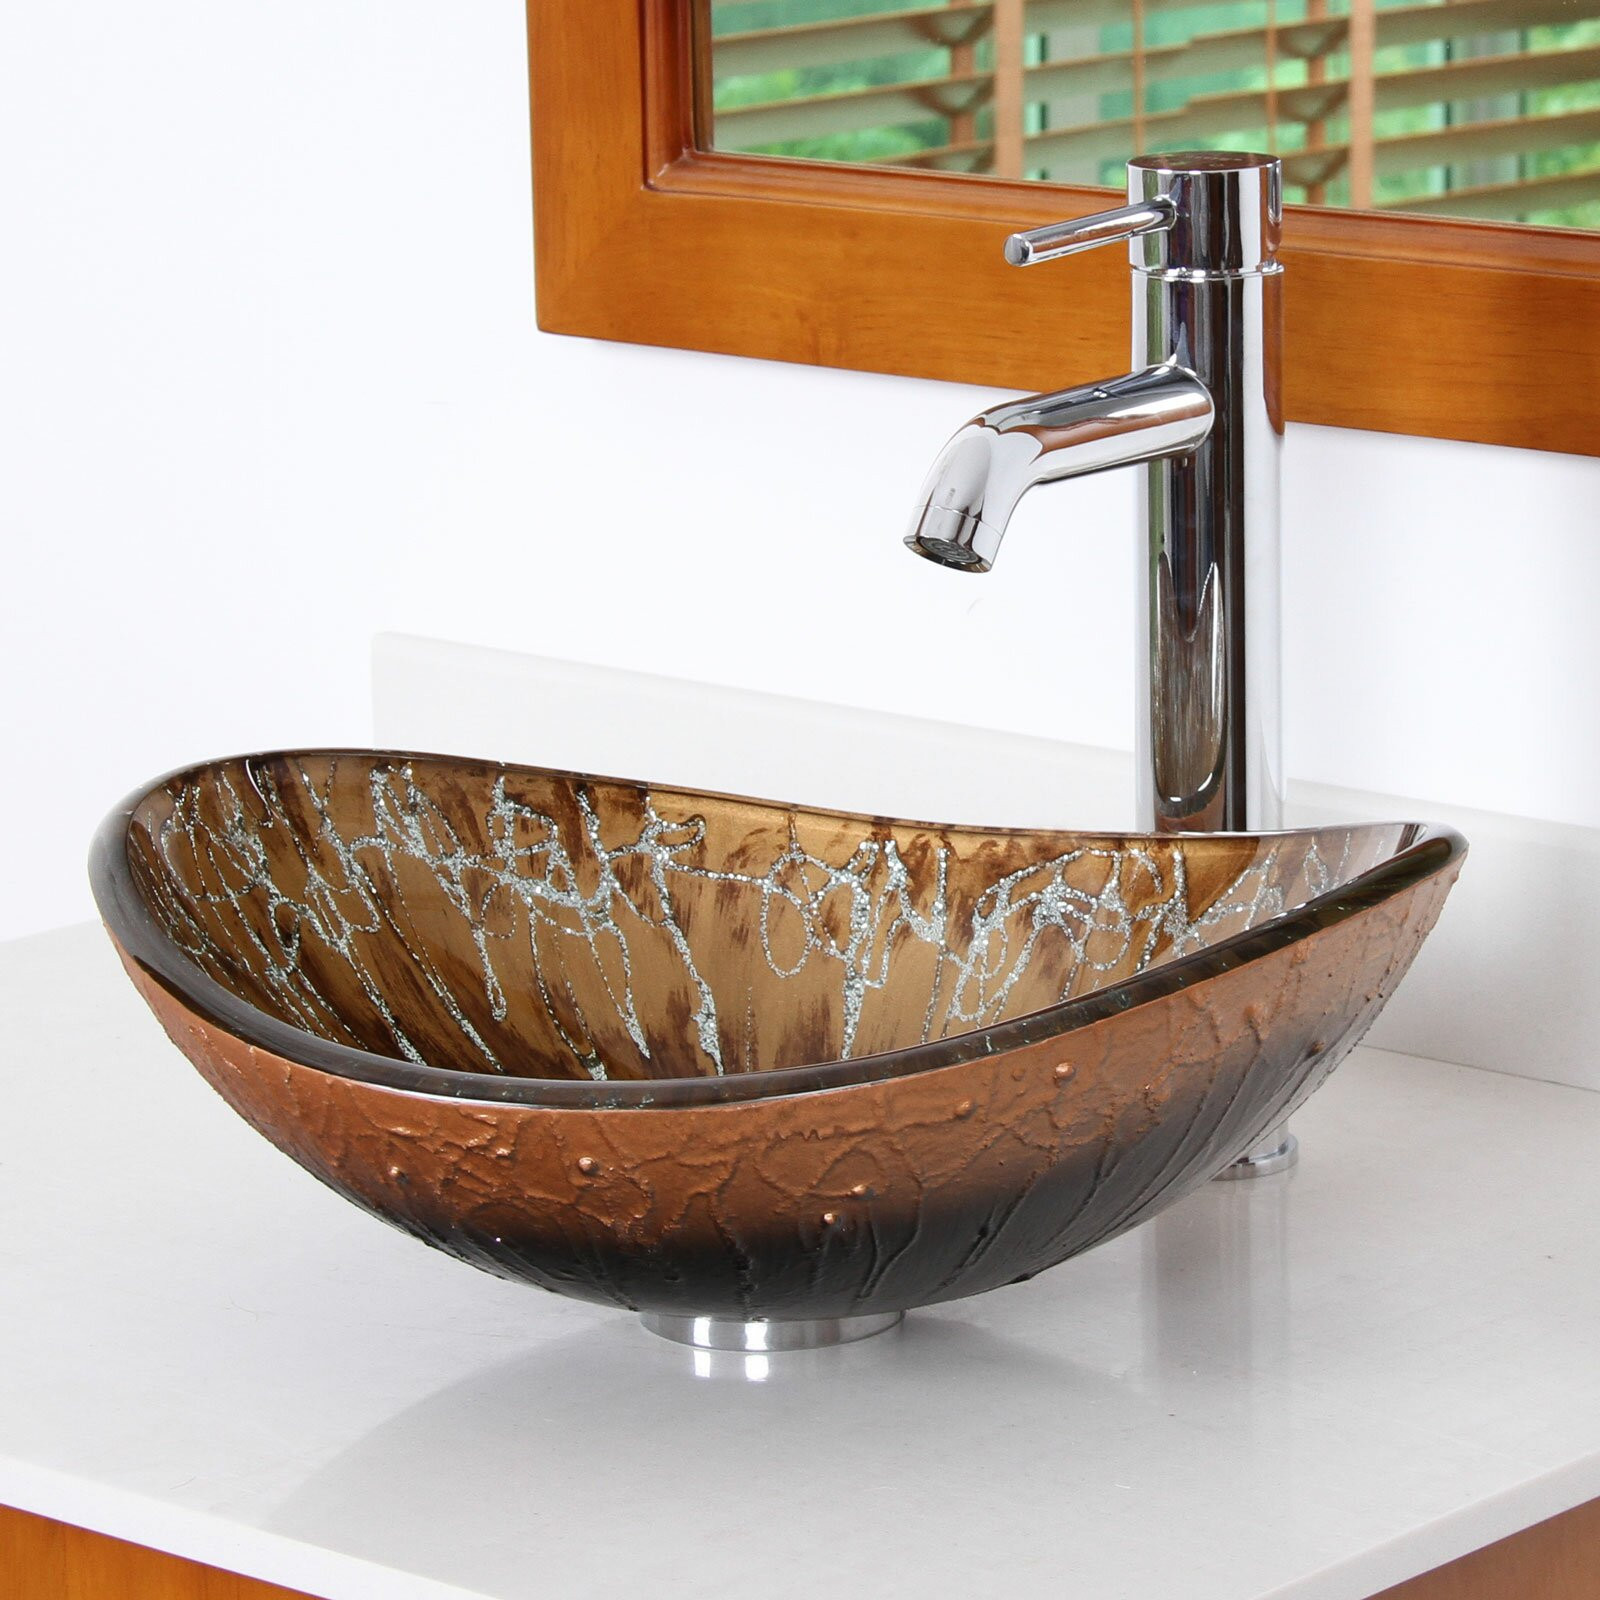 Sink Bowls For Bathroom
 Elite Hand Painted Boat Shaped Oval Bottom Bowl Vessel